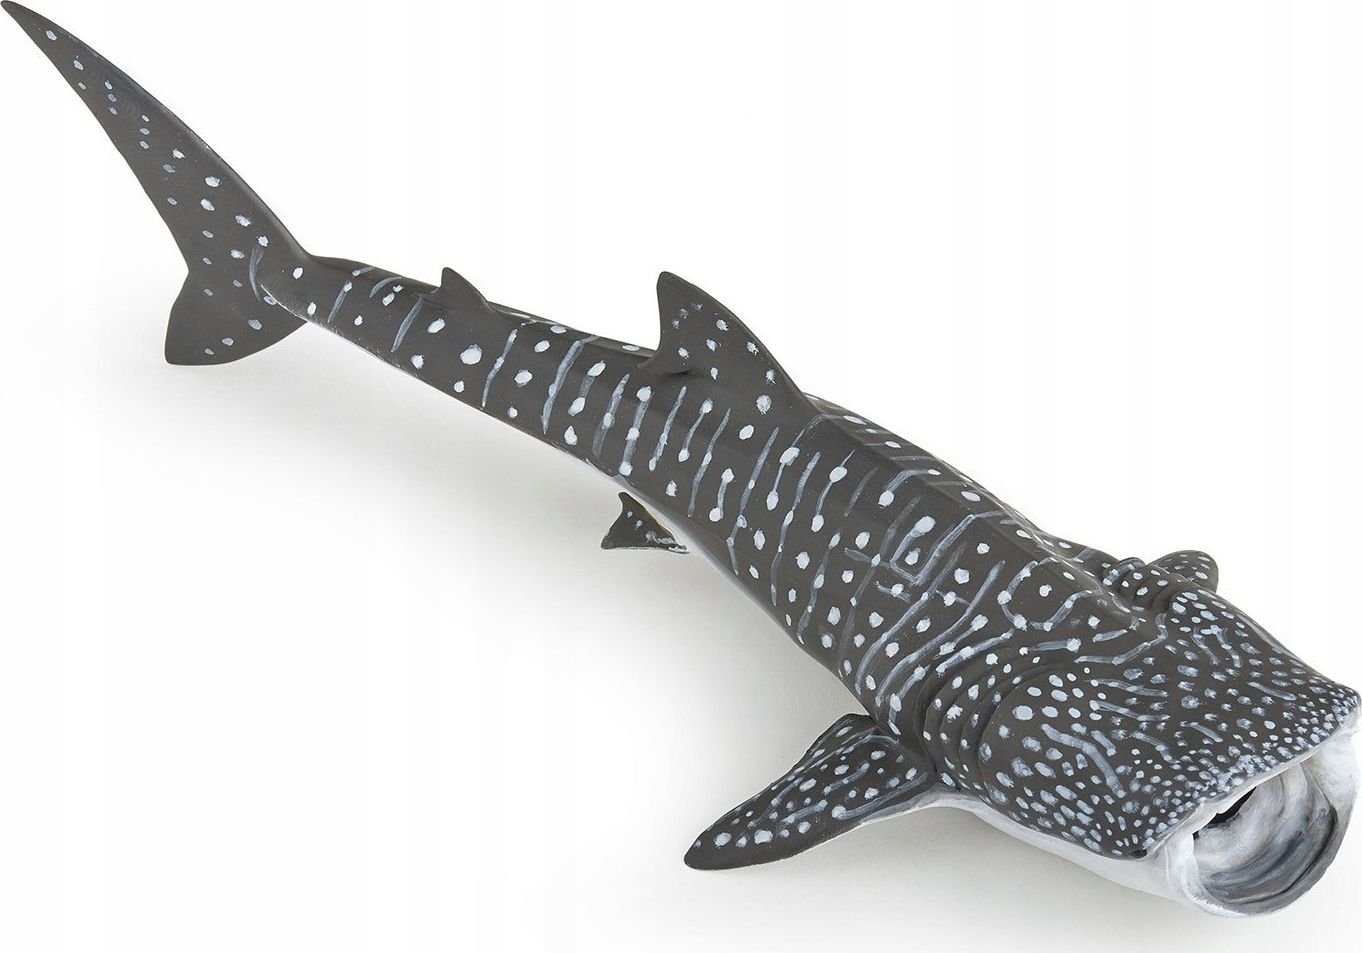 Figurina Papo - Rechinul balena